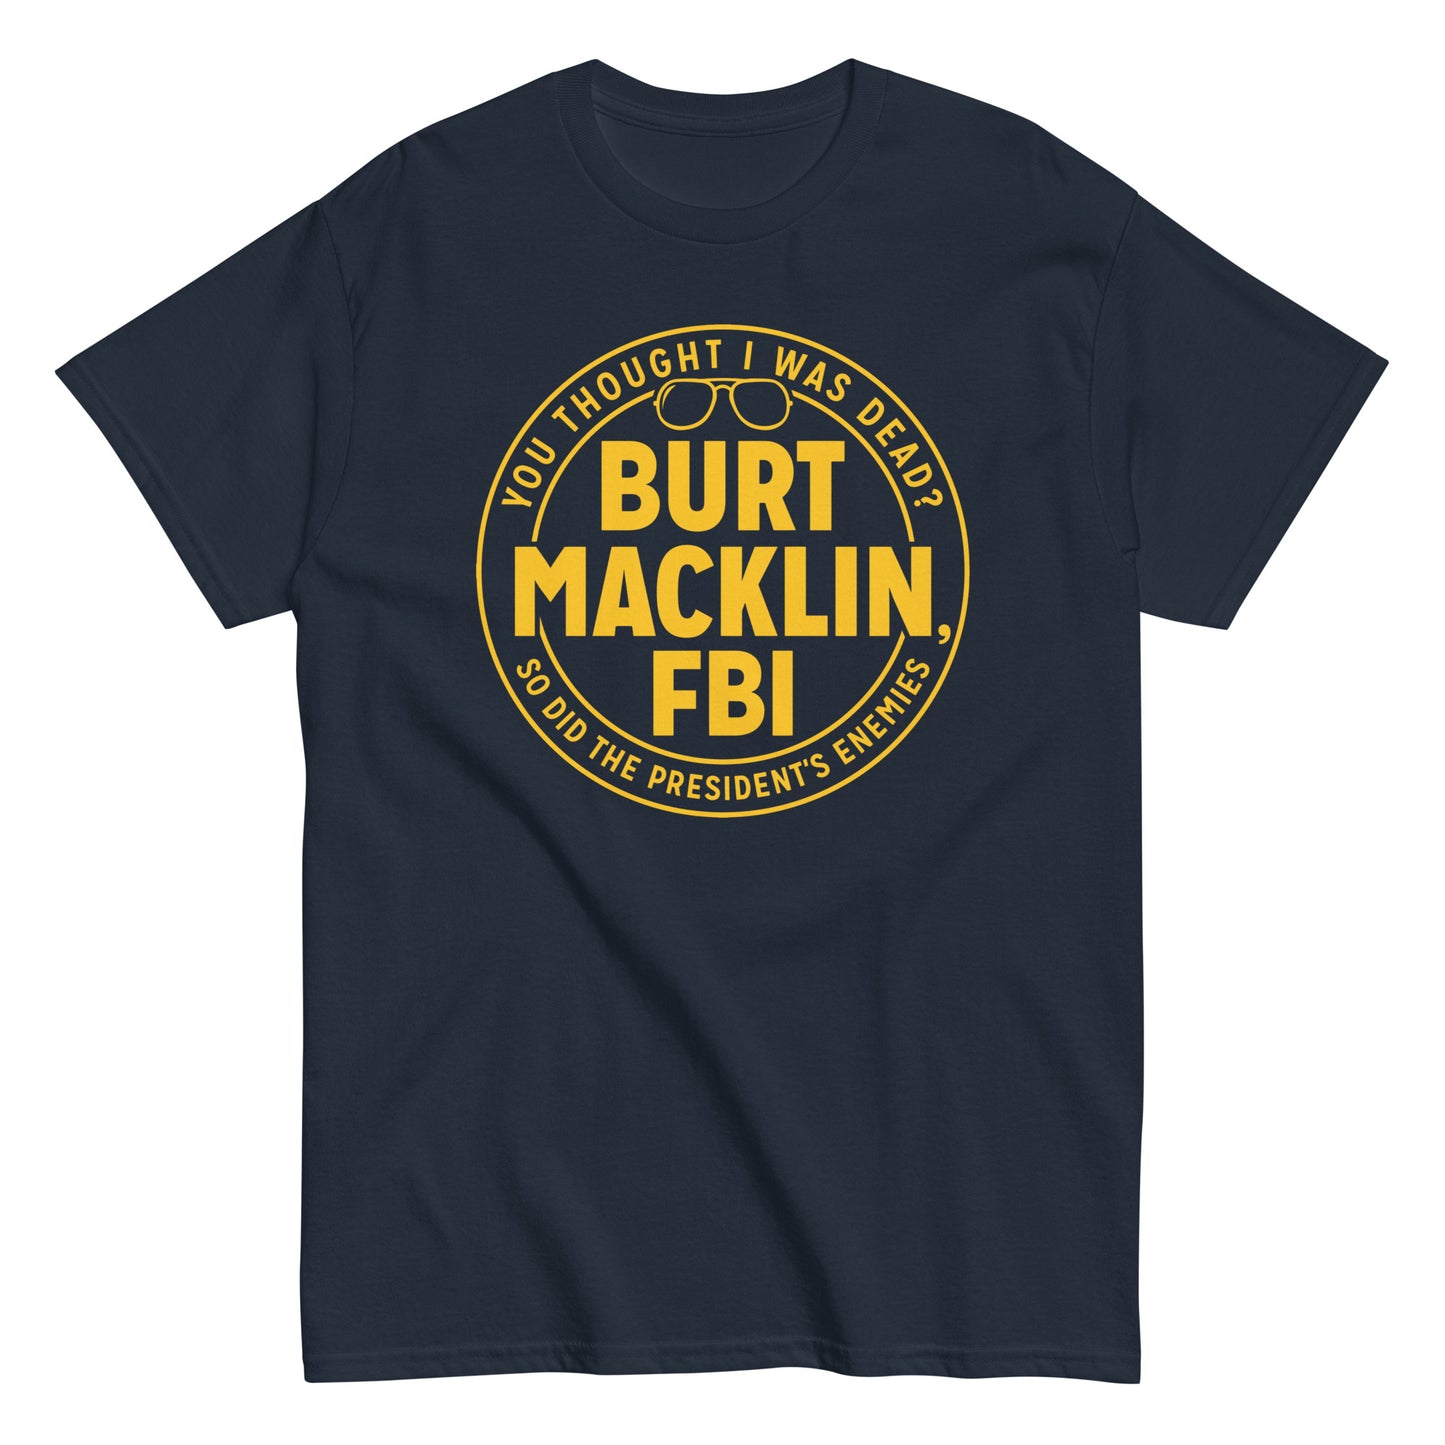 Burt Macklin, FBI Men's Classic Tee